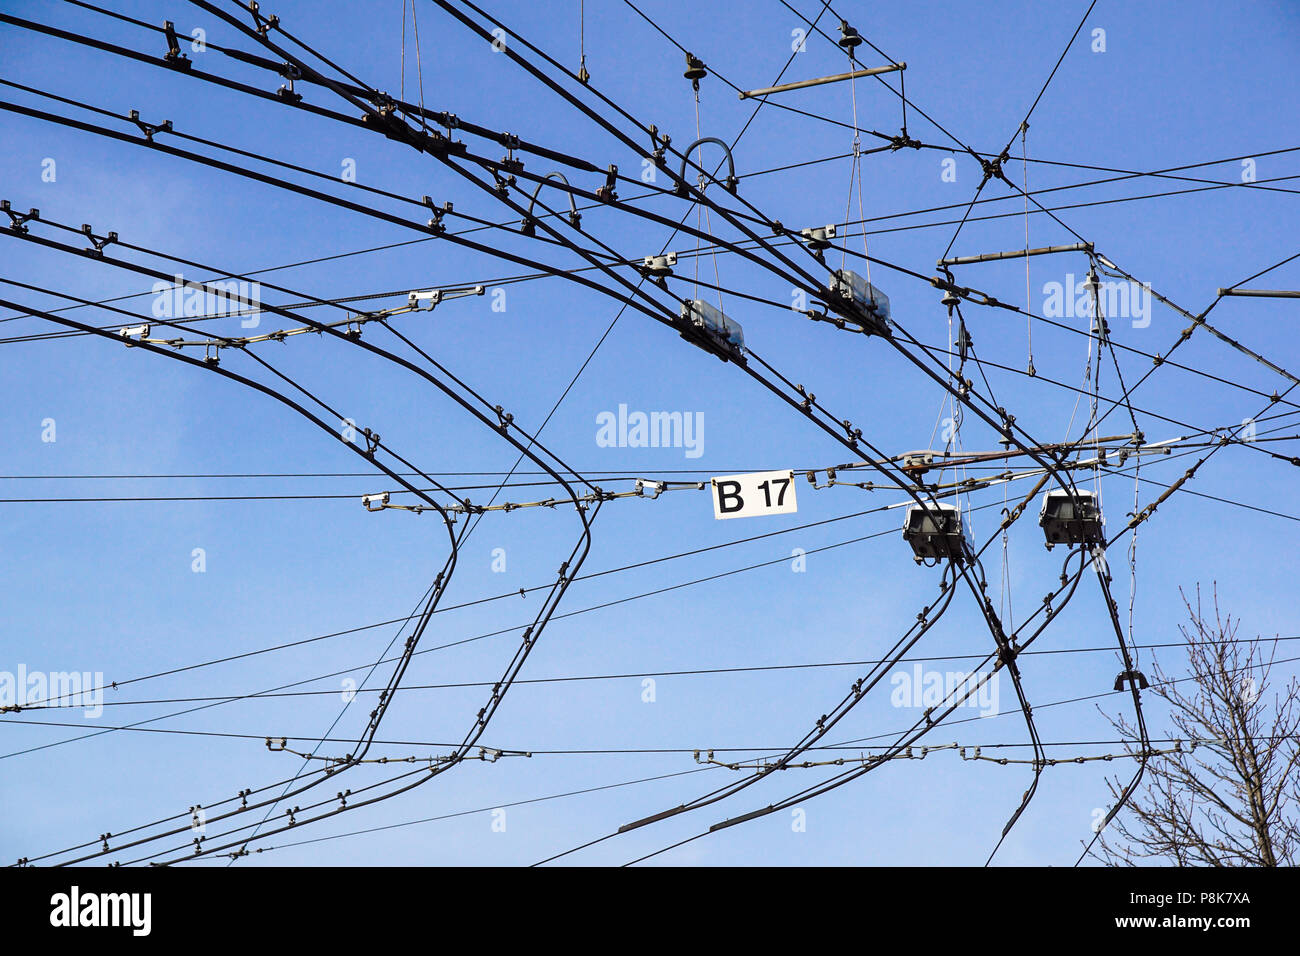 Black tram wires over blue sky . Urban transportation system Stock Photo